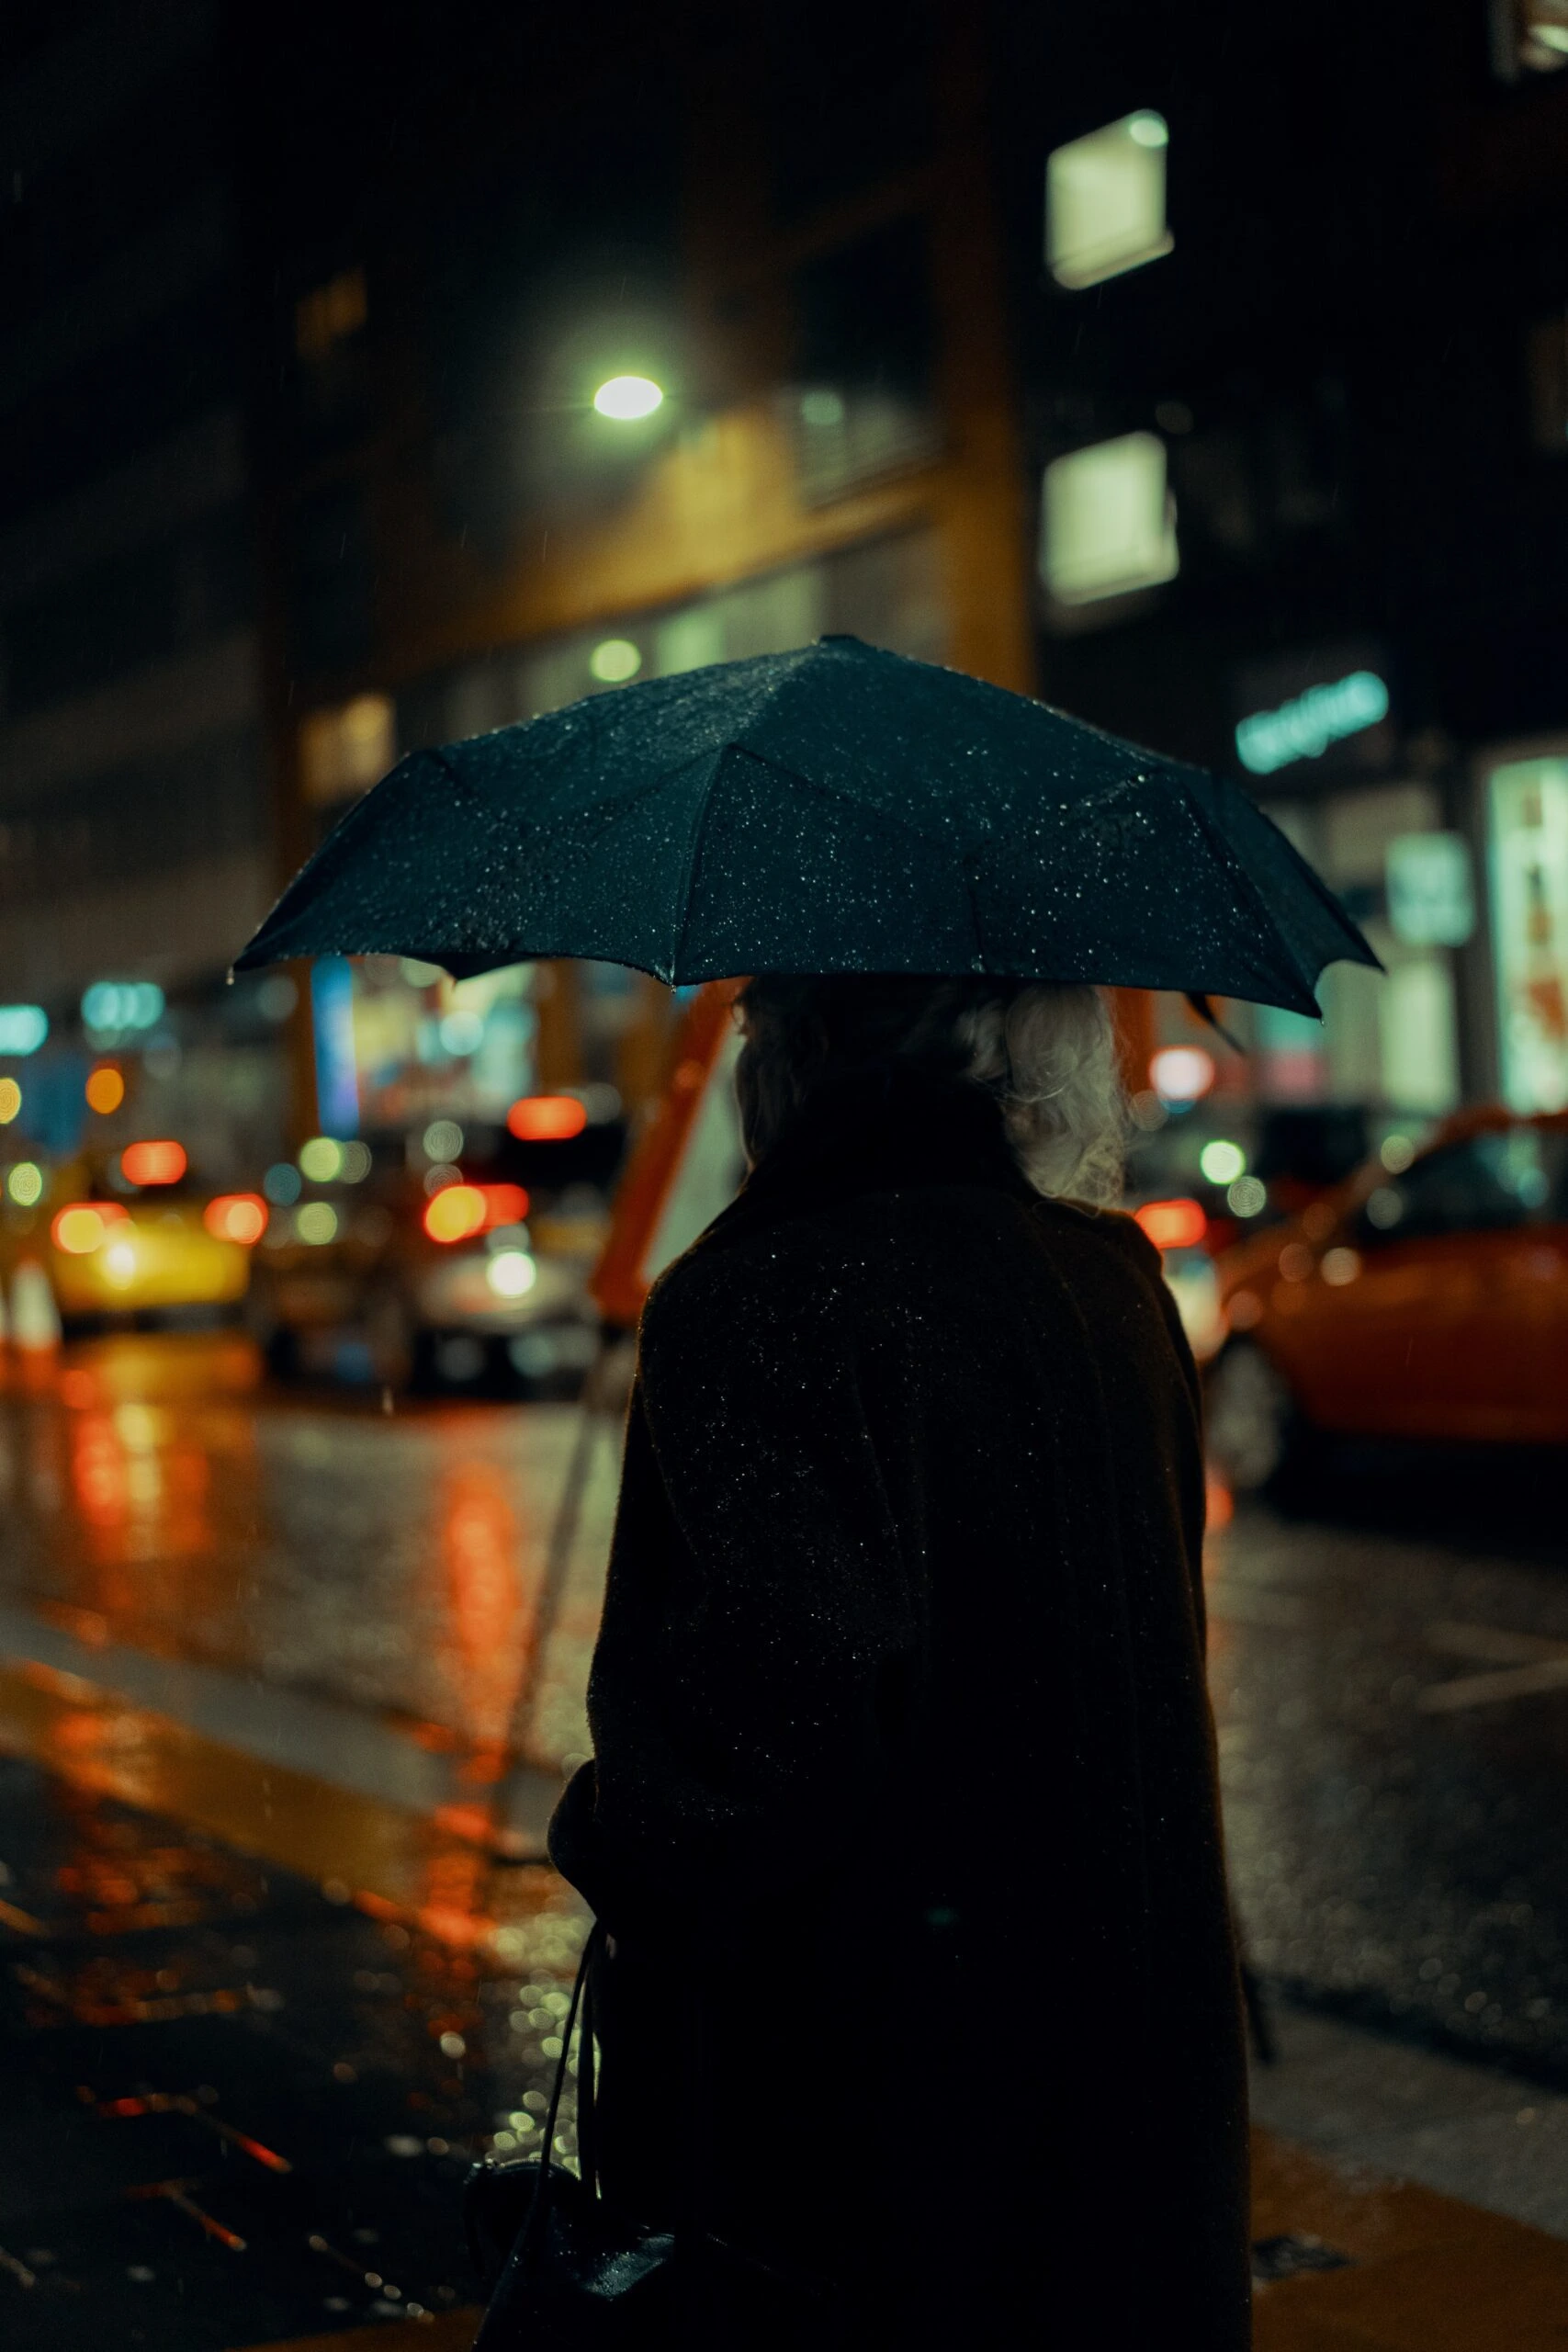 ross-sneddon-man with black umbrella in the rain NYC-unsplash (1)